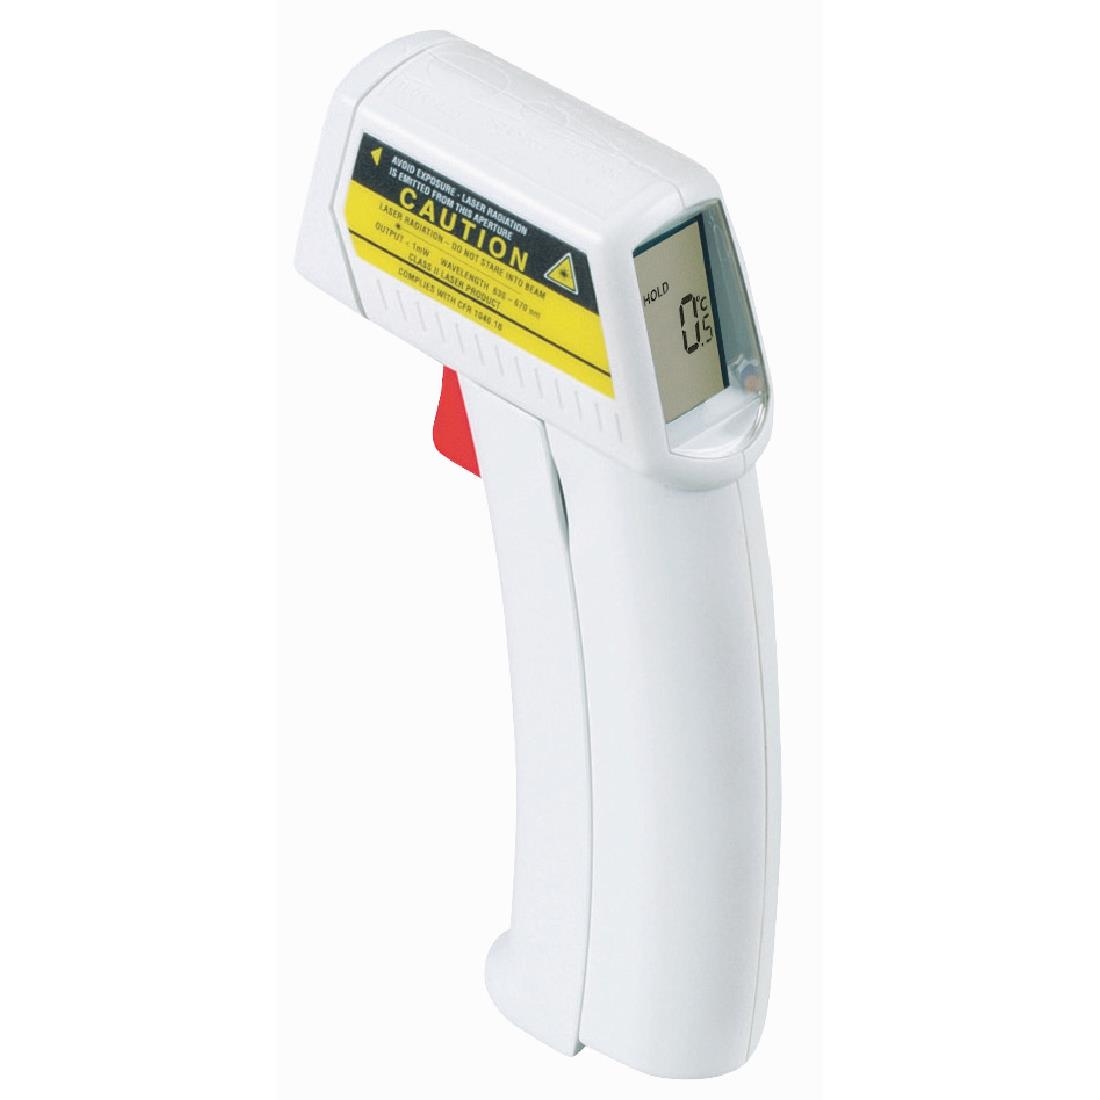 herhaling Immuniseren Prestigieus Online Comark infrarood thermometer kopen / bestellen